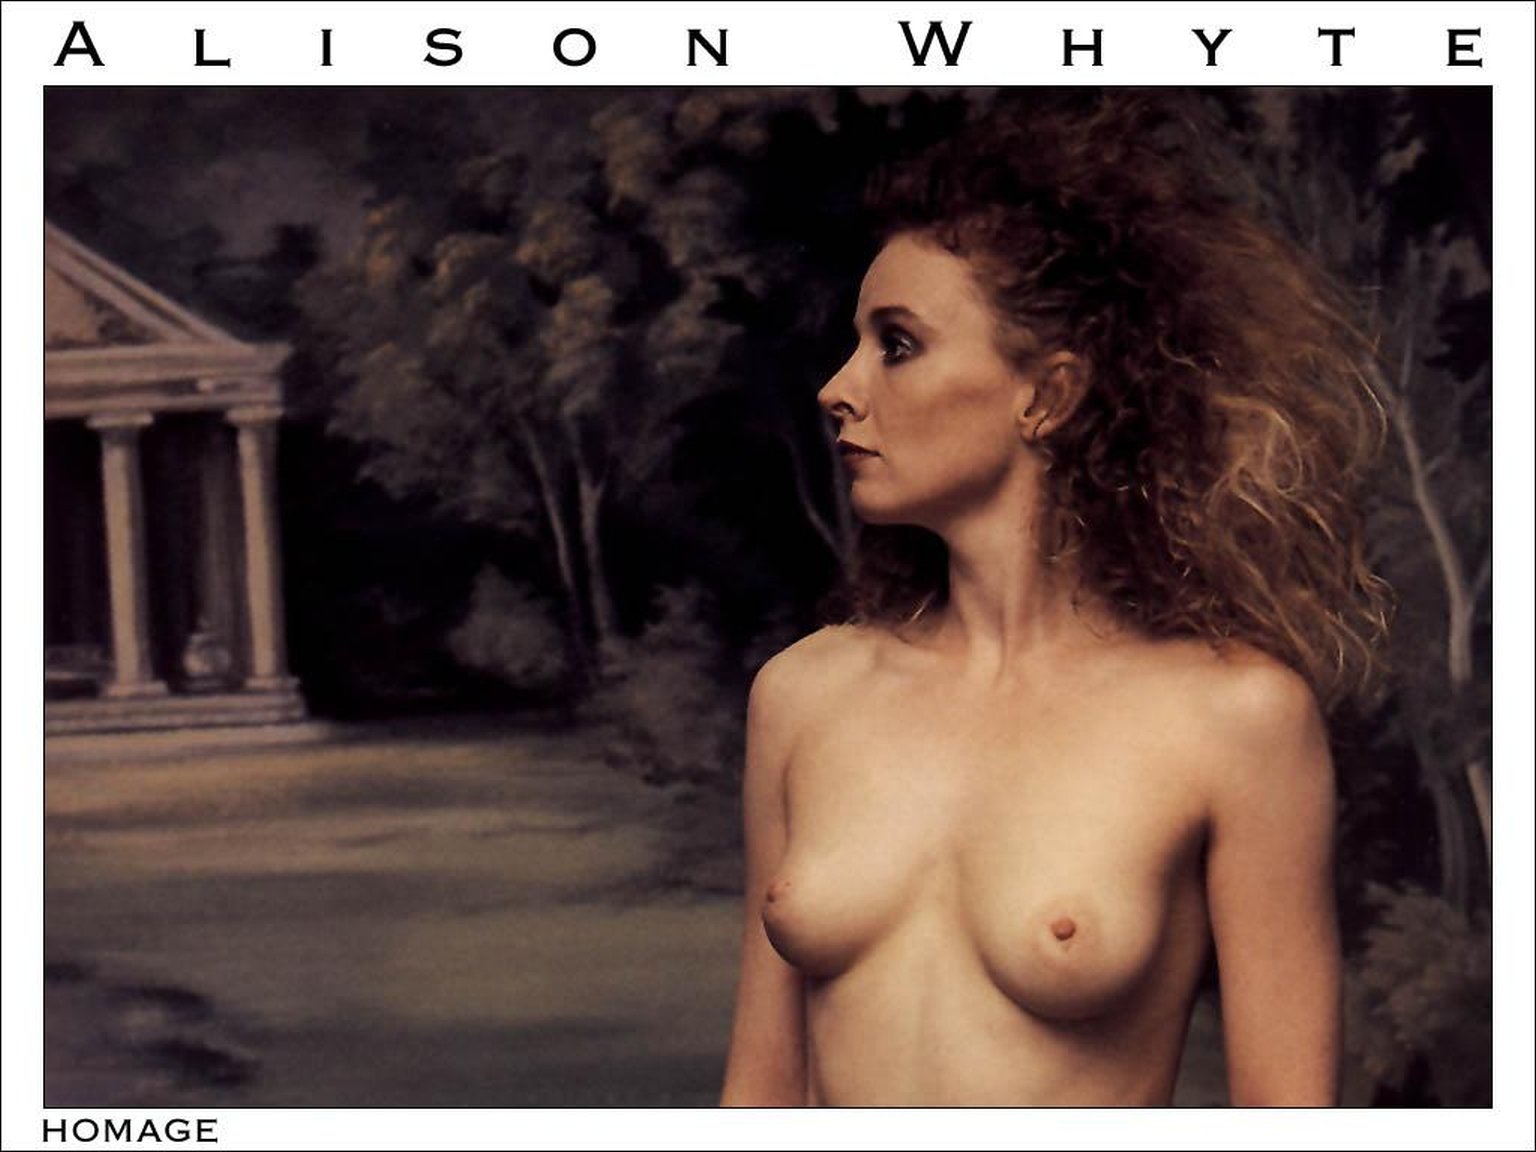 Allison whyte nude